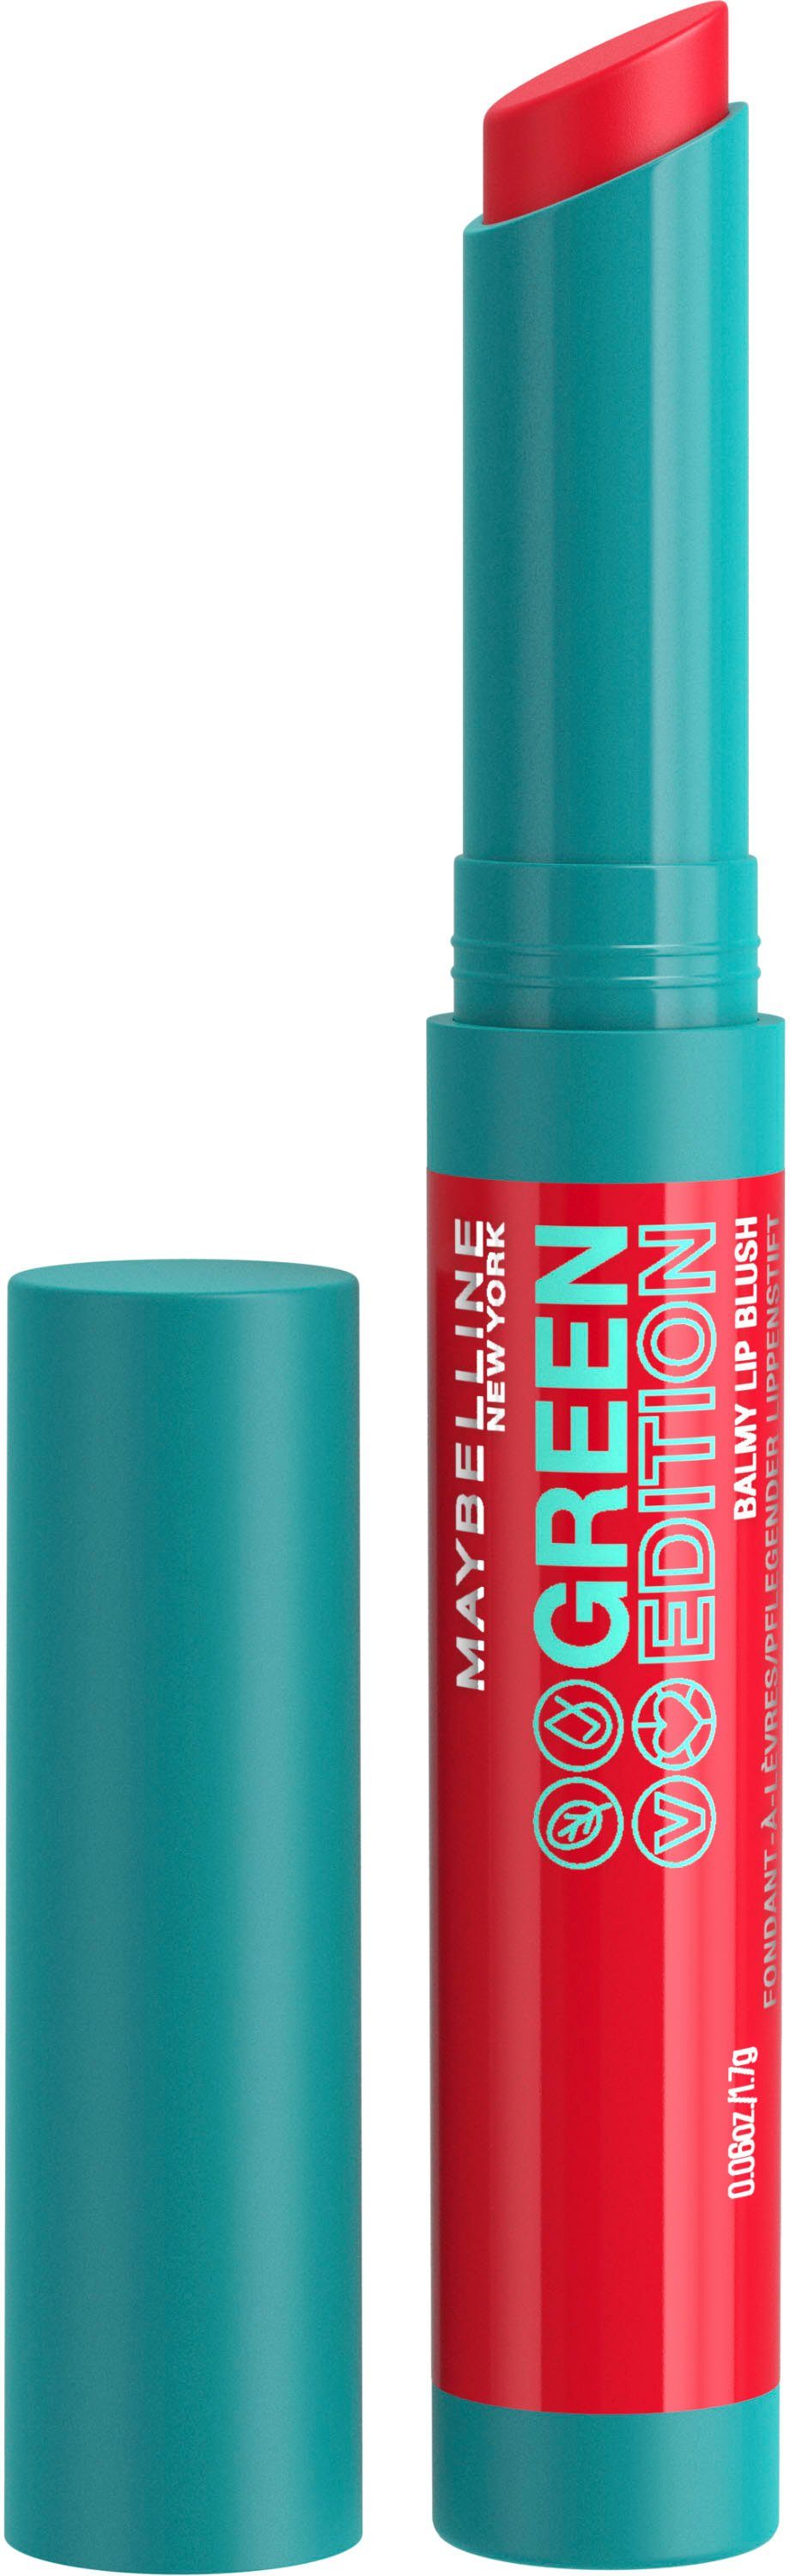 Lippenstift Balmy 004 YORK Edition NEW Flare Lip Green MAYBELLINE Blush